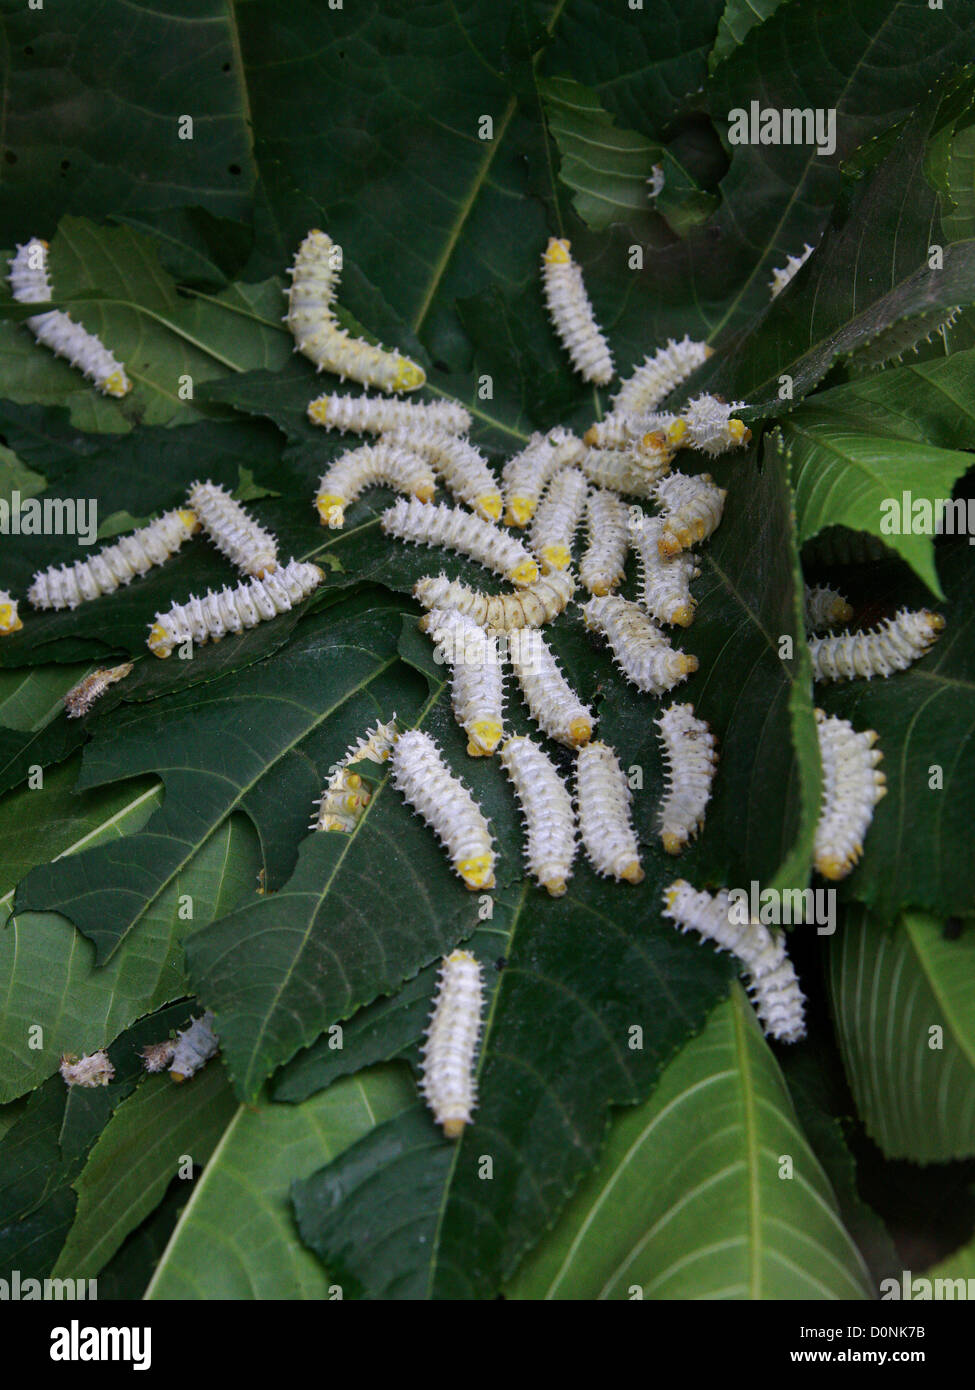 Indian Eri Silkmoth Caterpillars, Samia ricini, Saturniidae, Lepidoptera. India. Syn. Philosamia ricini. Stock Photo